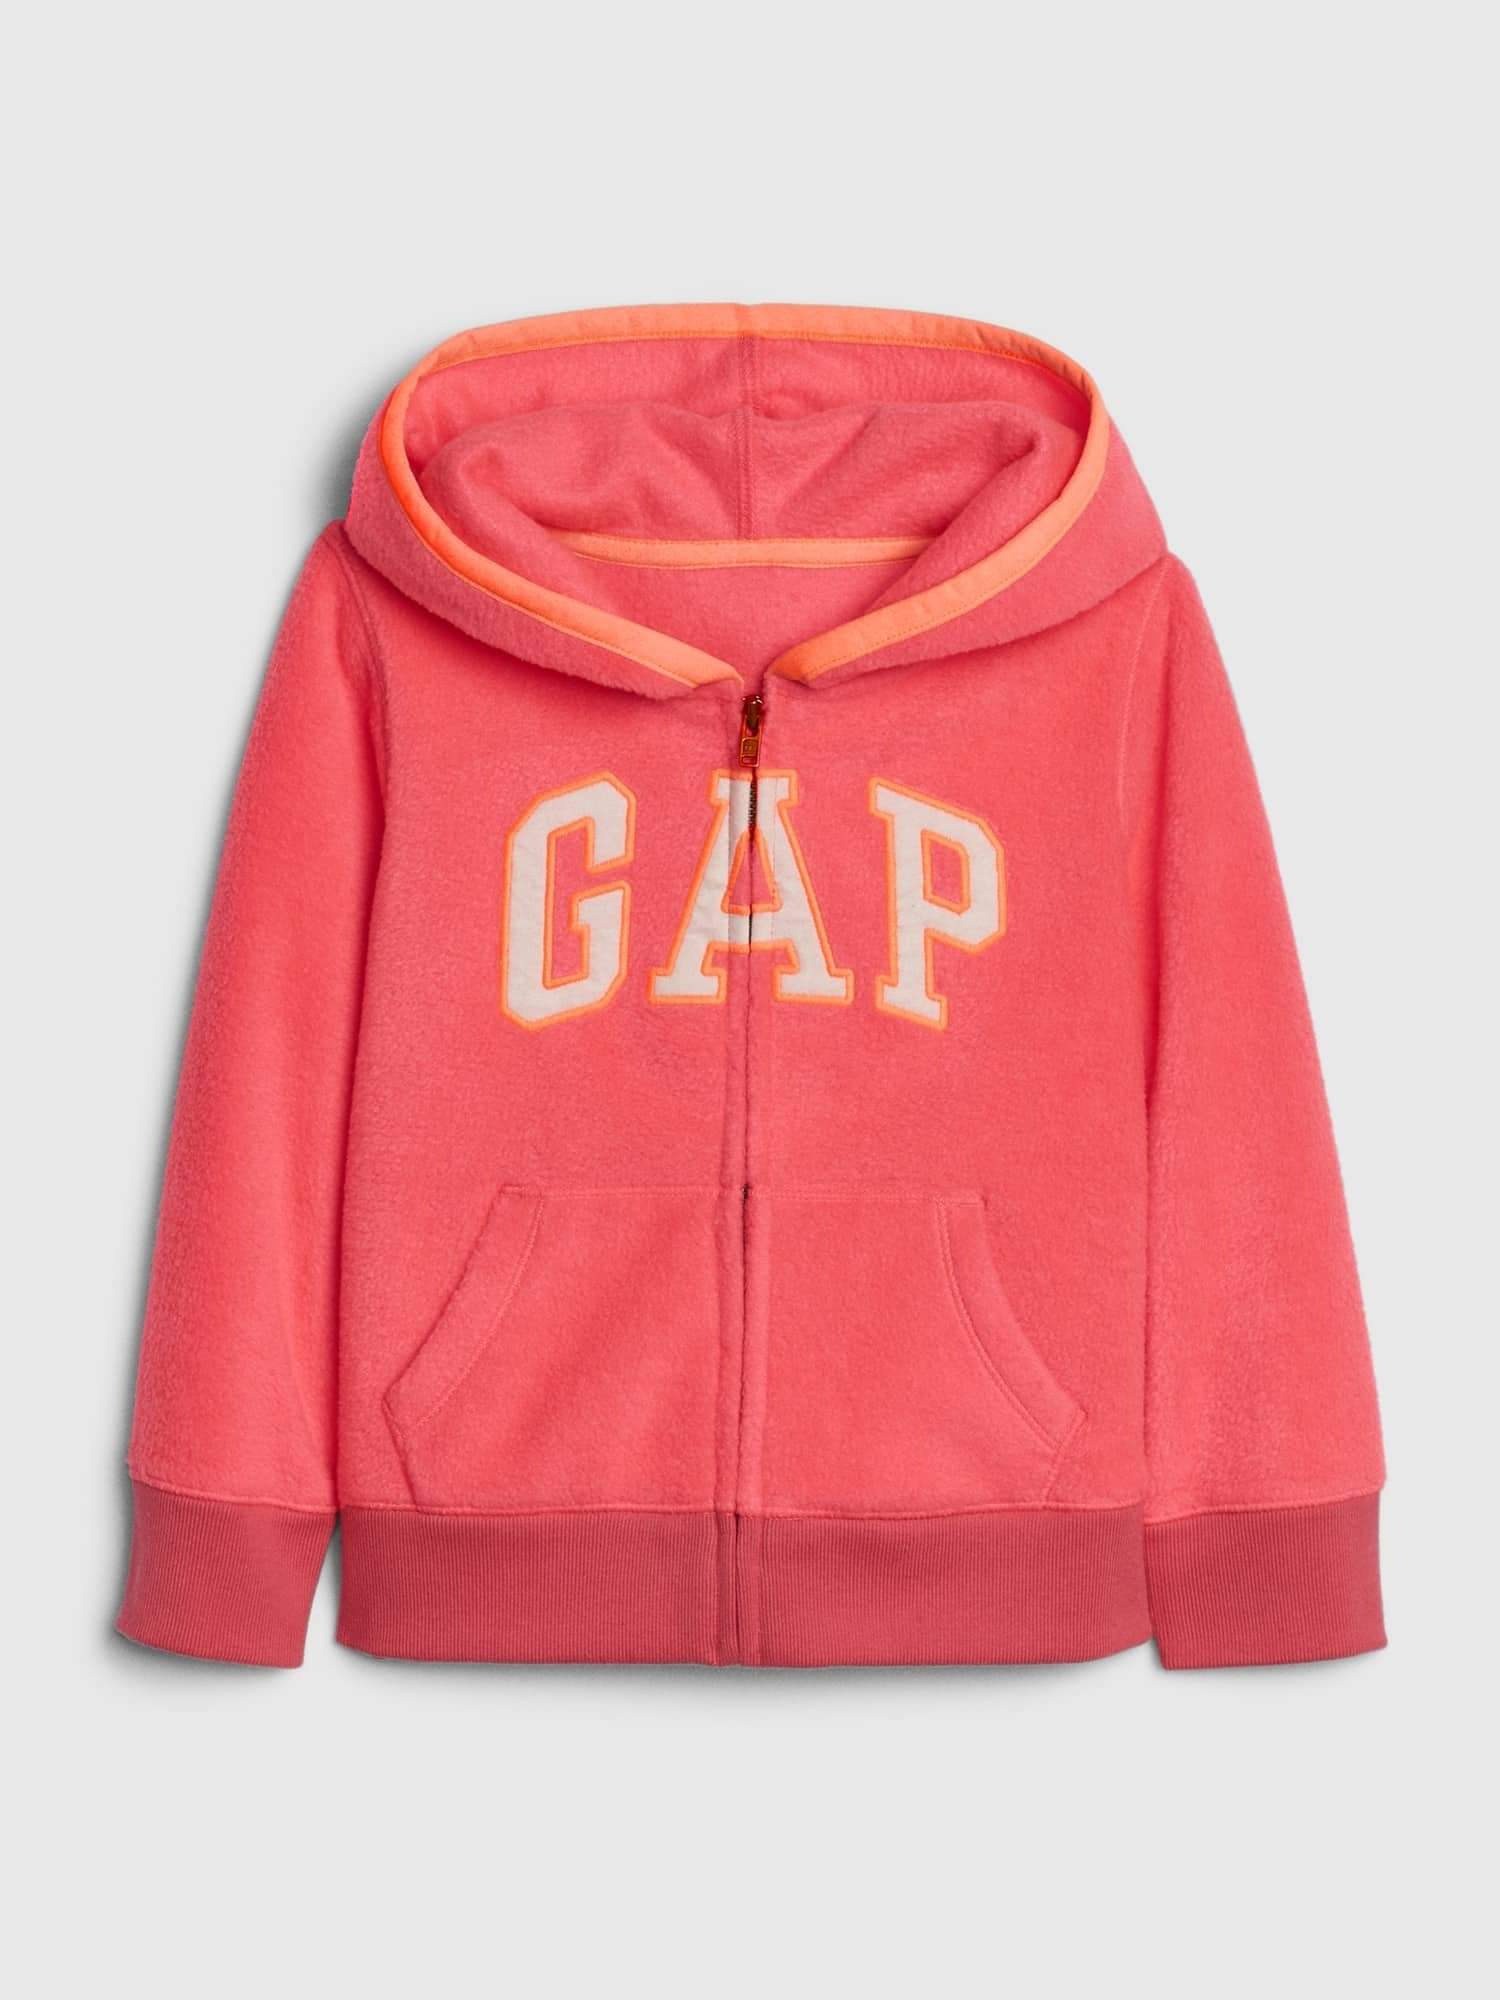 Gap Fleece Hoodie – ONE Shopping Mall